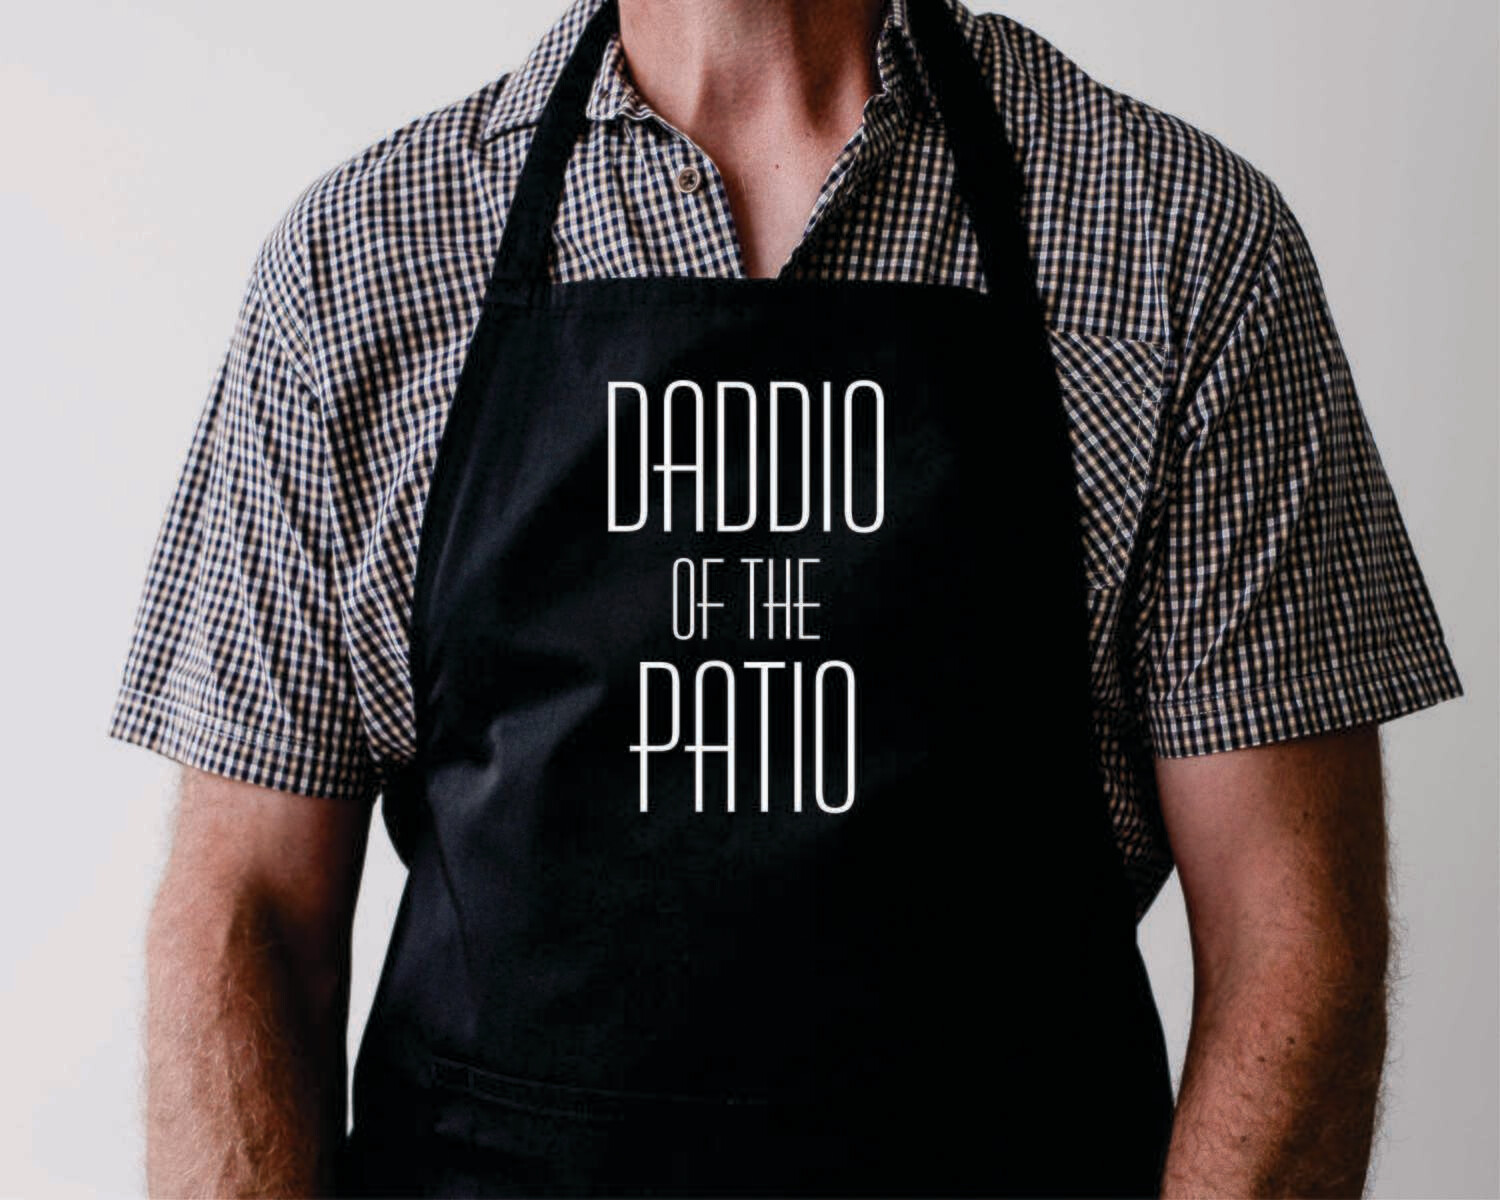 Daddio of the Patio Apron